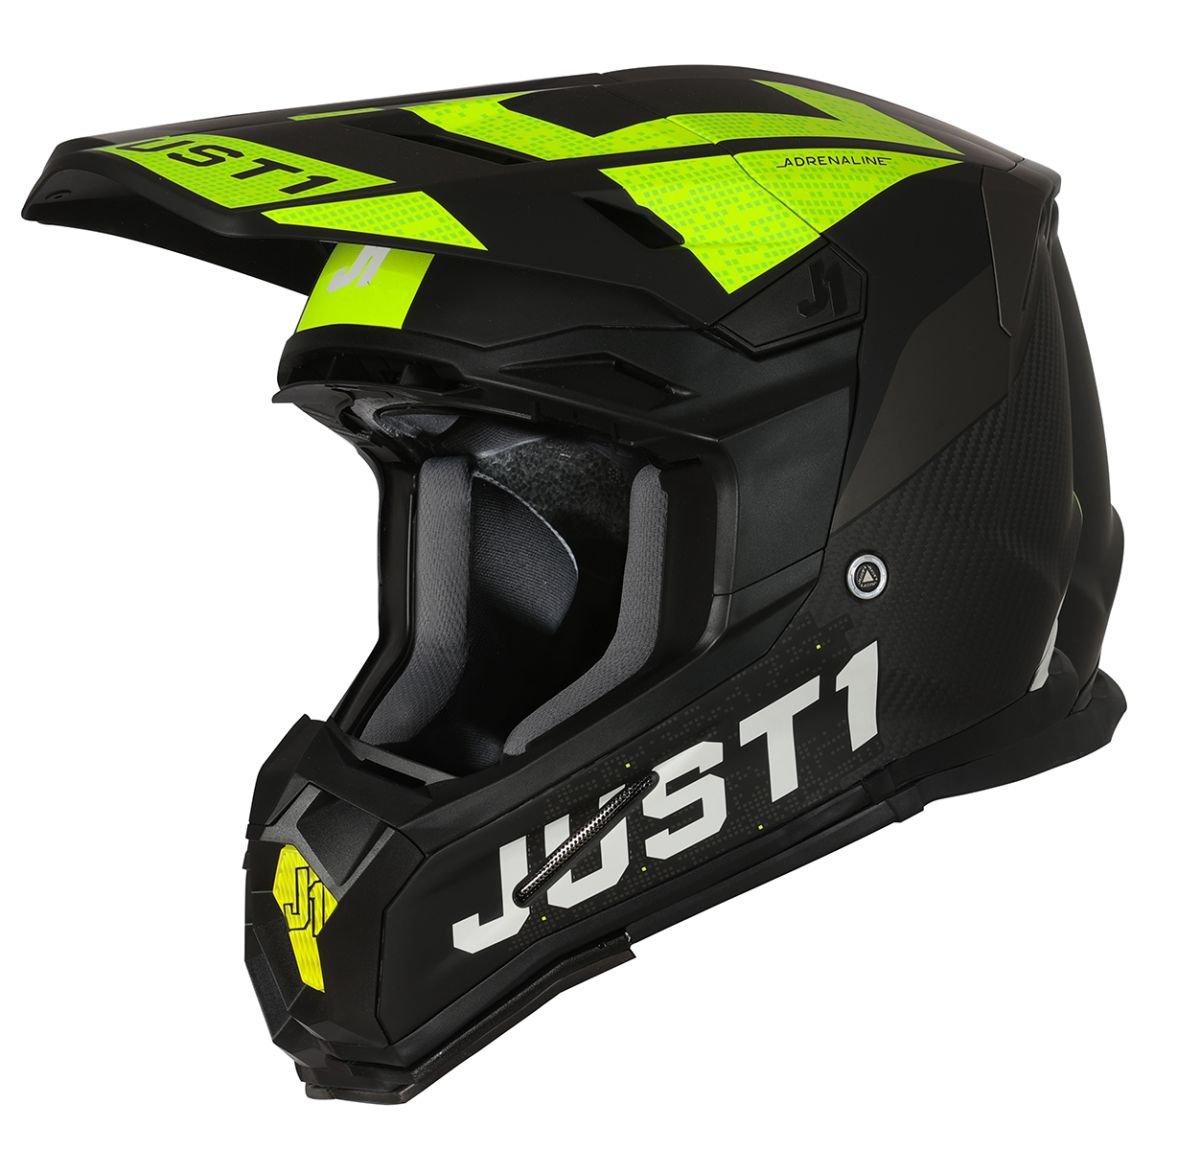 Image of Just1 Helmet J-22 Adrenaline Schwarz Gelb Fluo Carbon Matt Crosshelm Größe XL